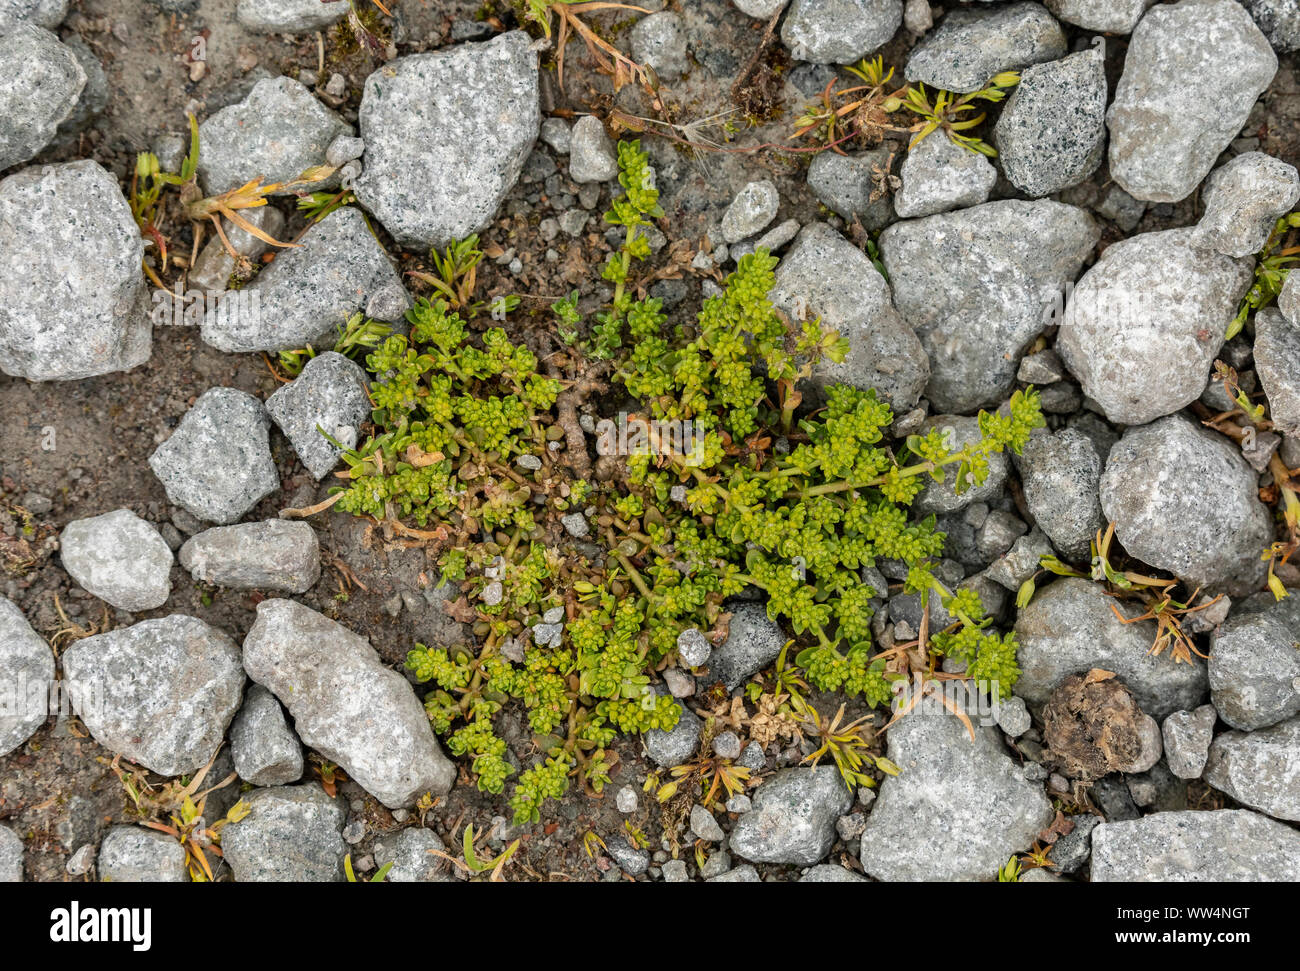 Glabrous rupturewort, Herniaria glabra, in flower among gravel. Stock Photo